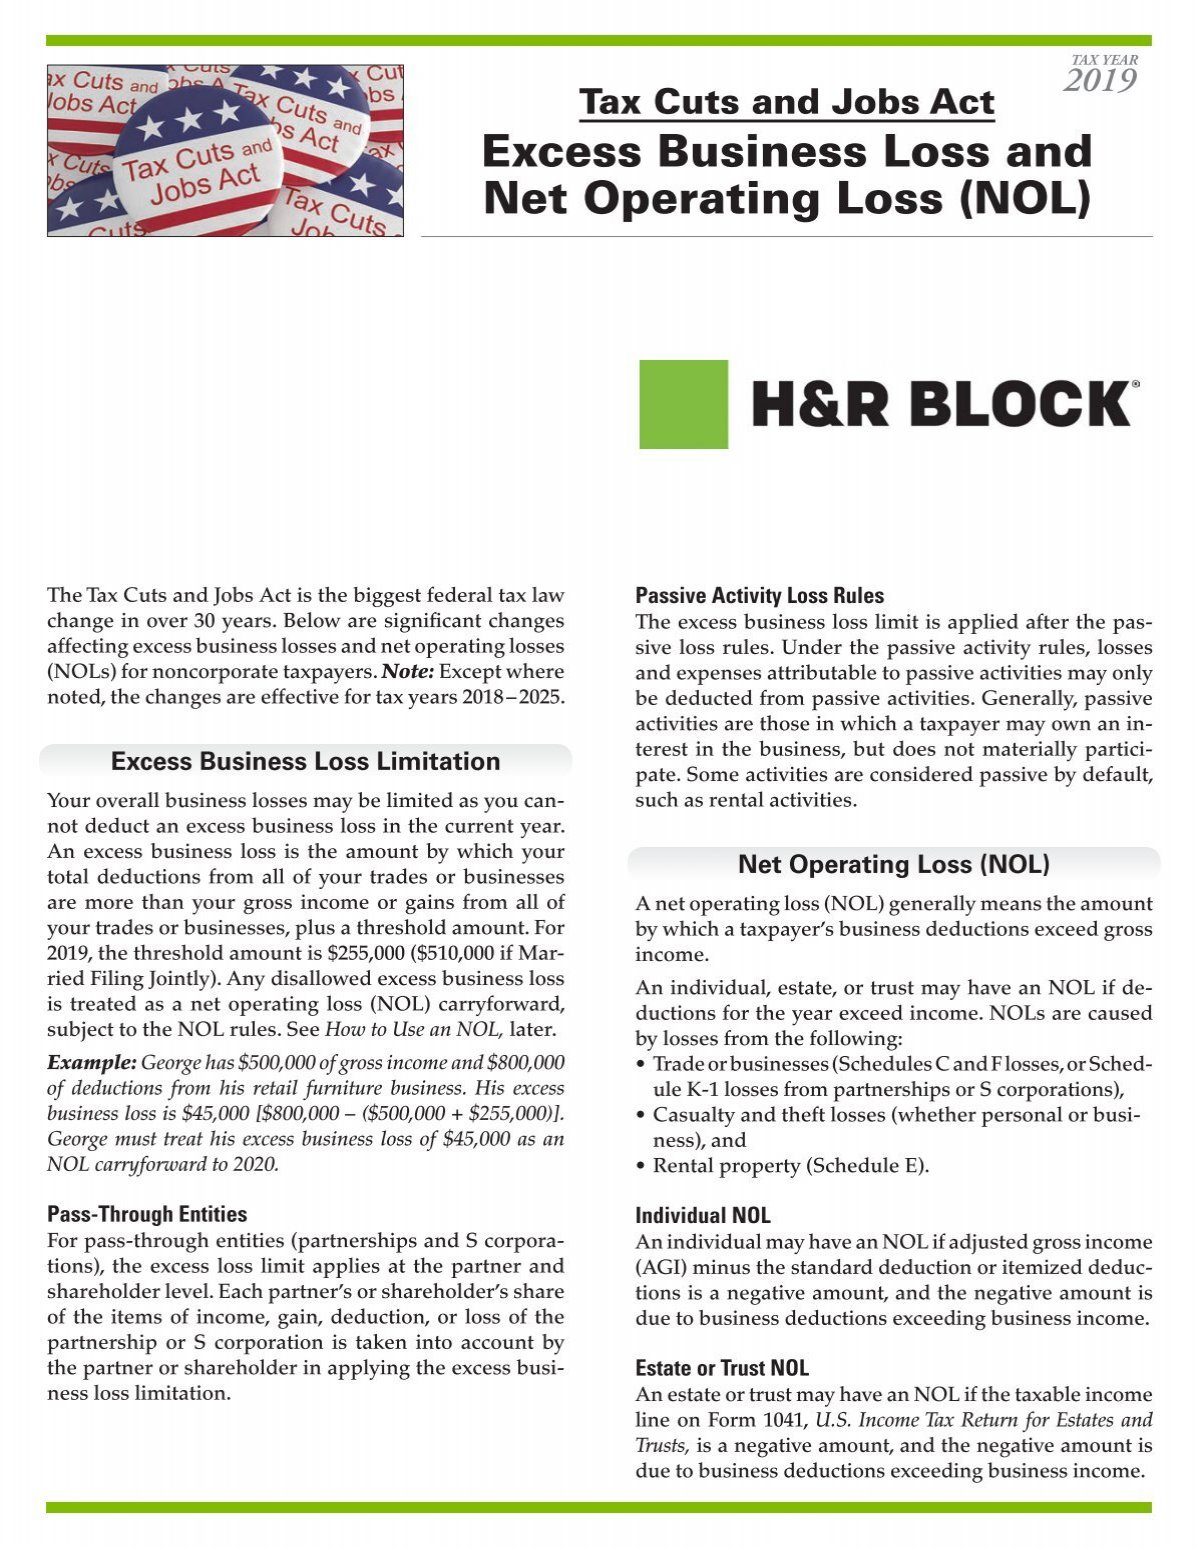 handout-excess-business-loss-net-operating-loss-1